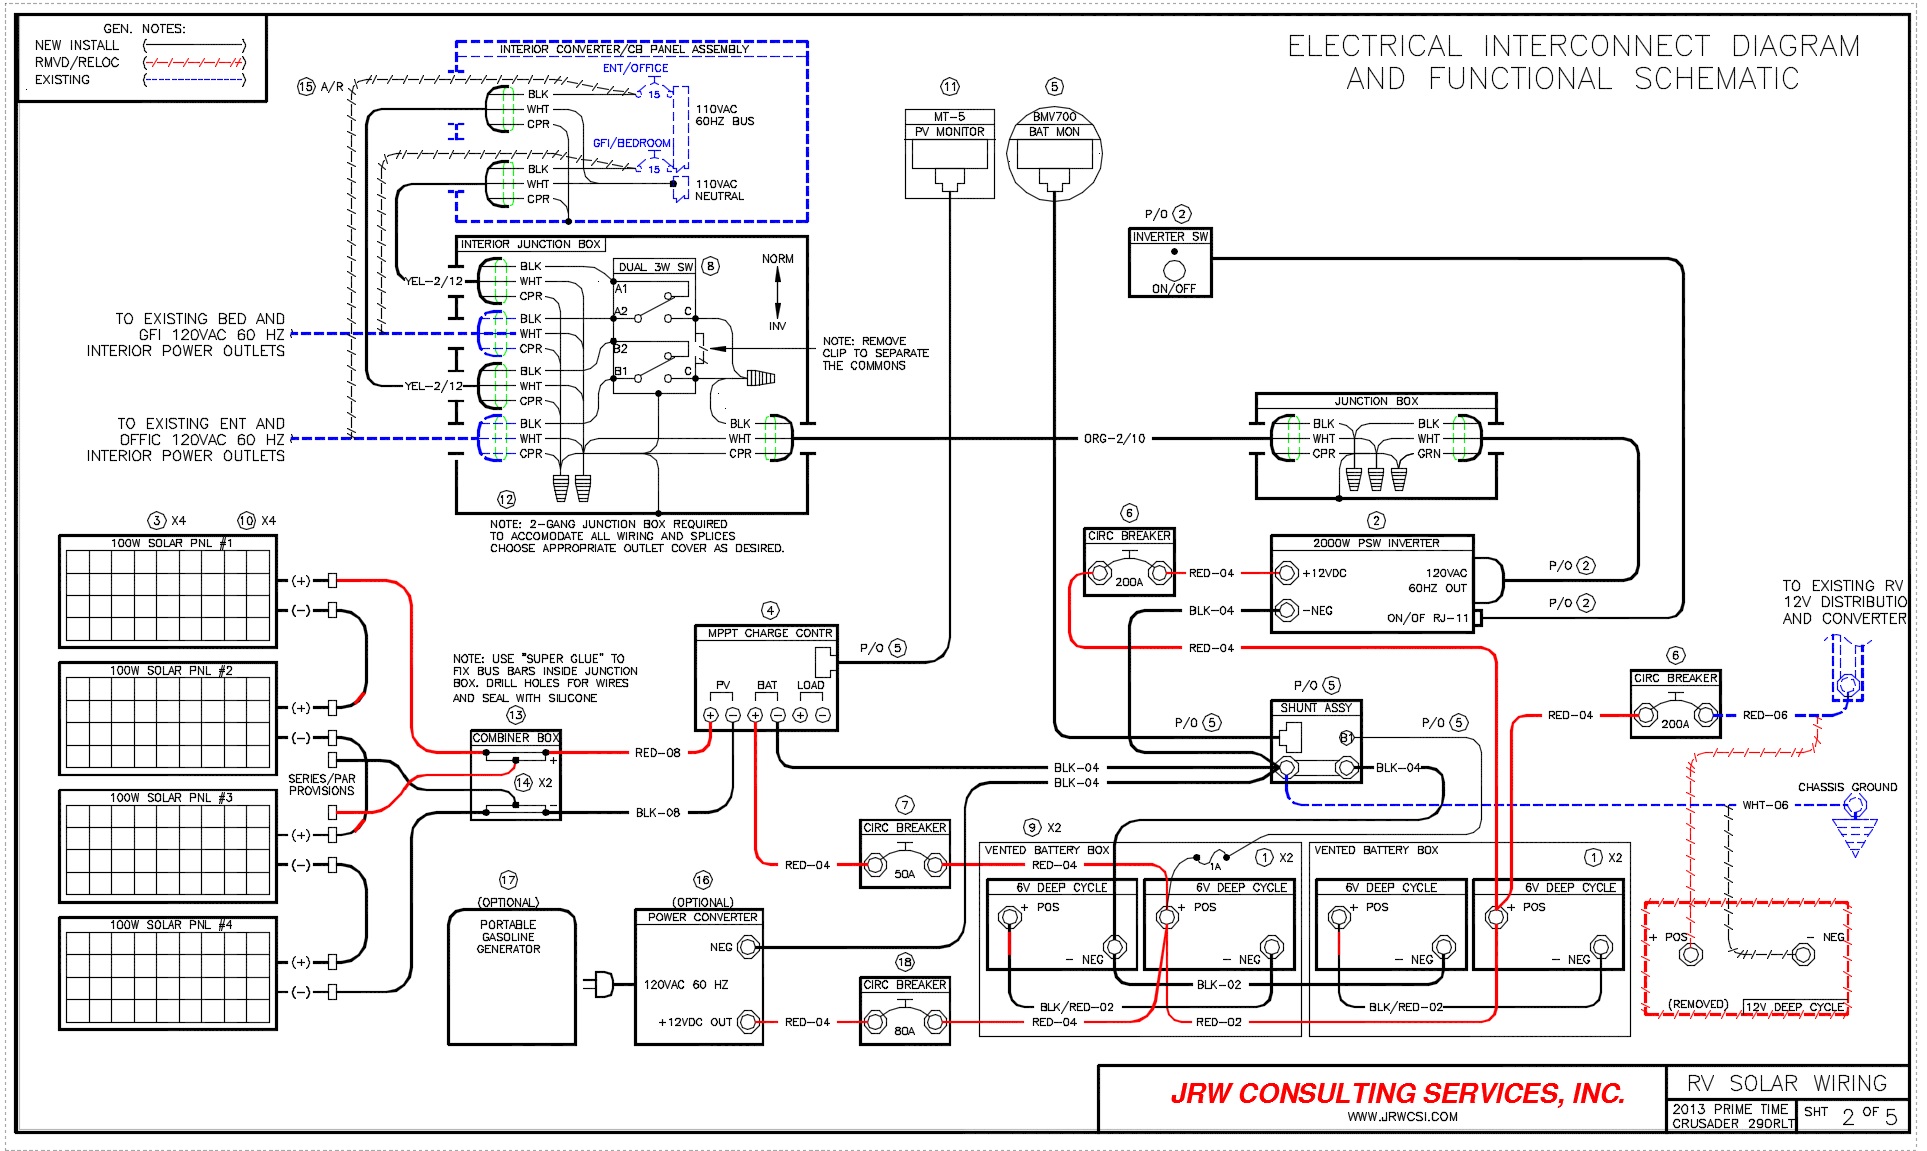 s&s camper wiring diagram